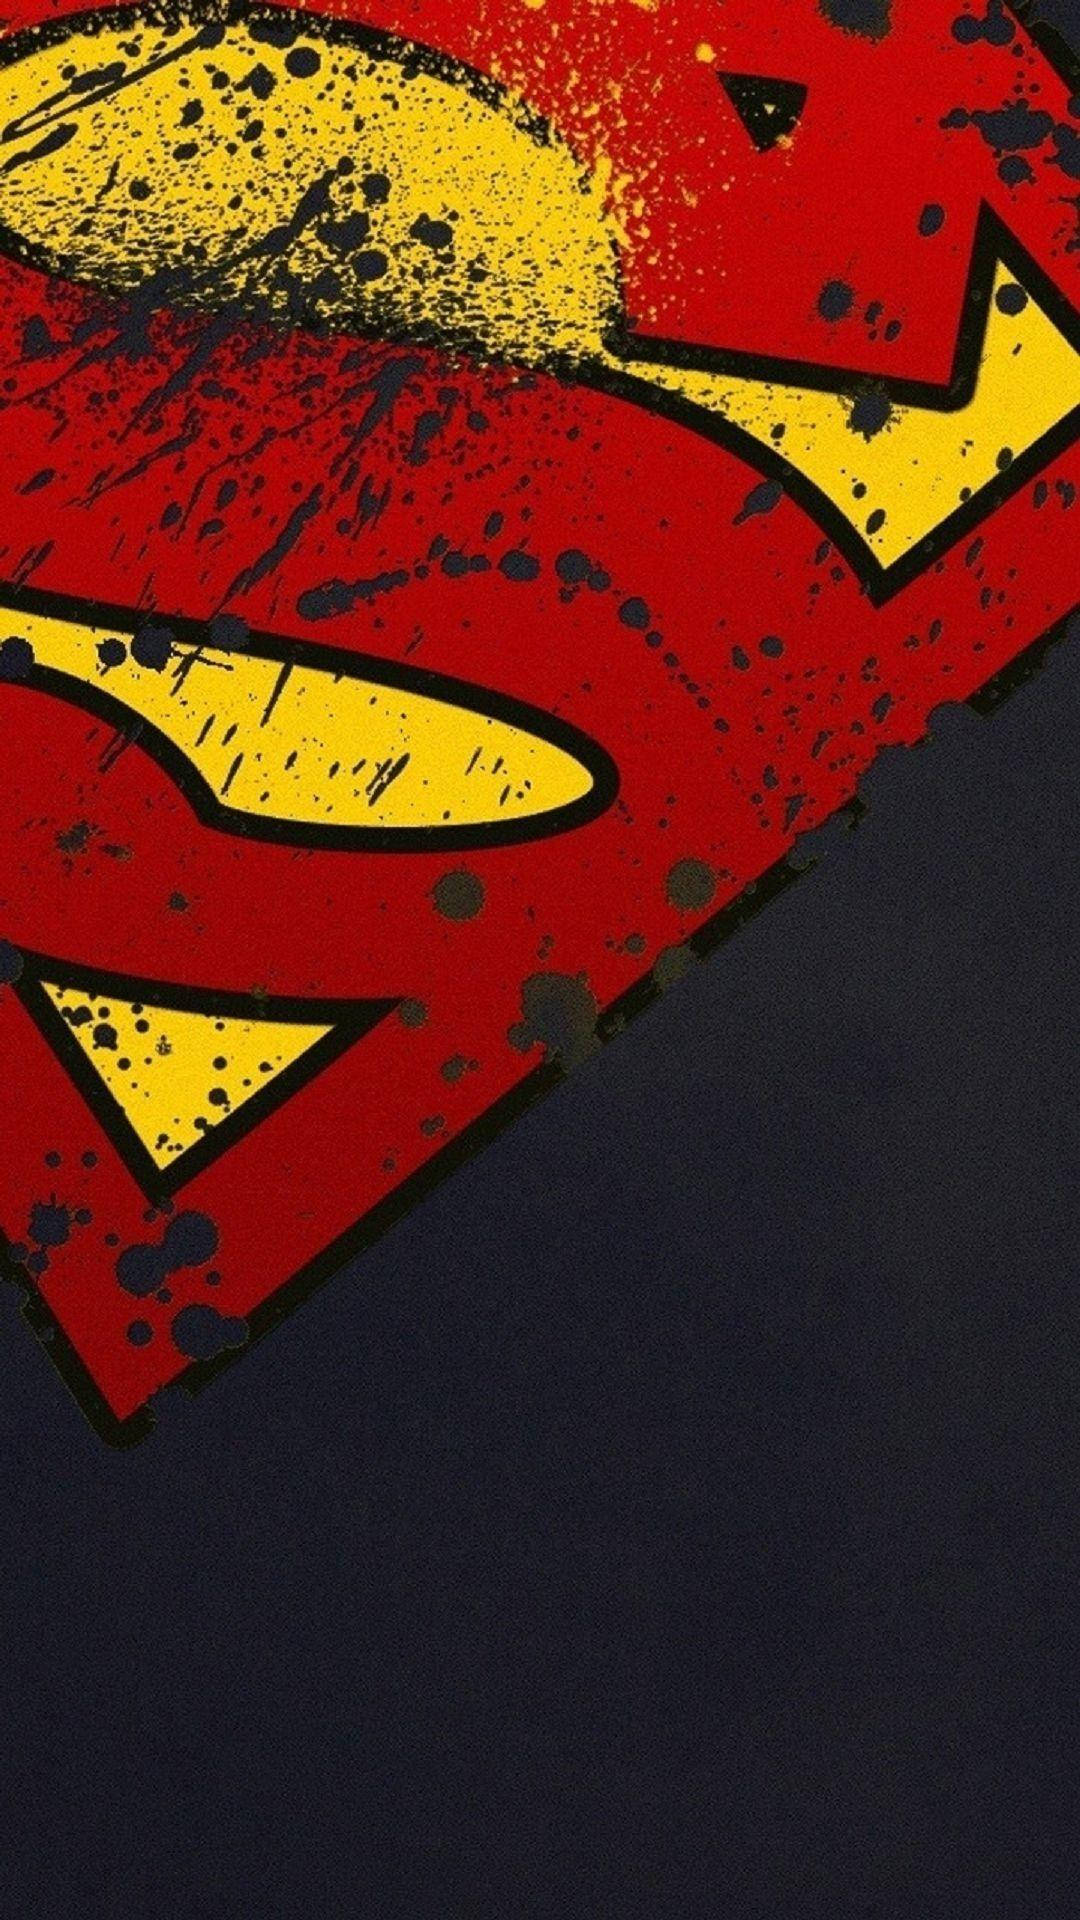 Caption: Valiant Superman Symbol On Iphone Background Wallpaper